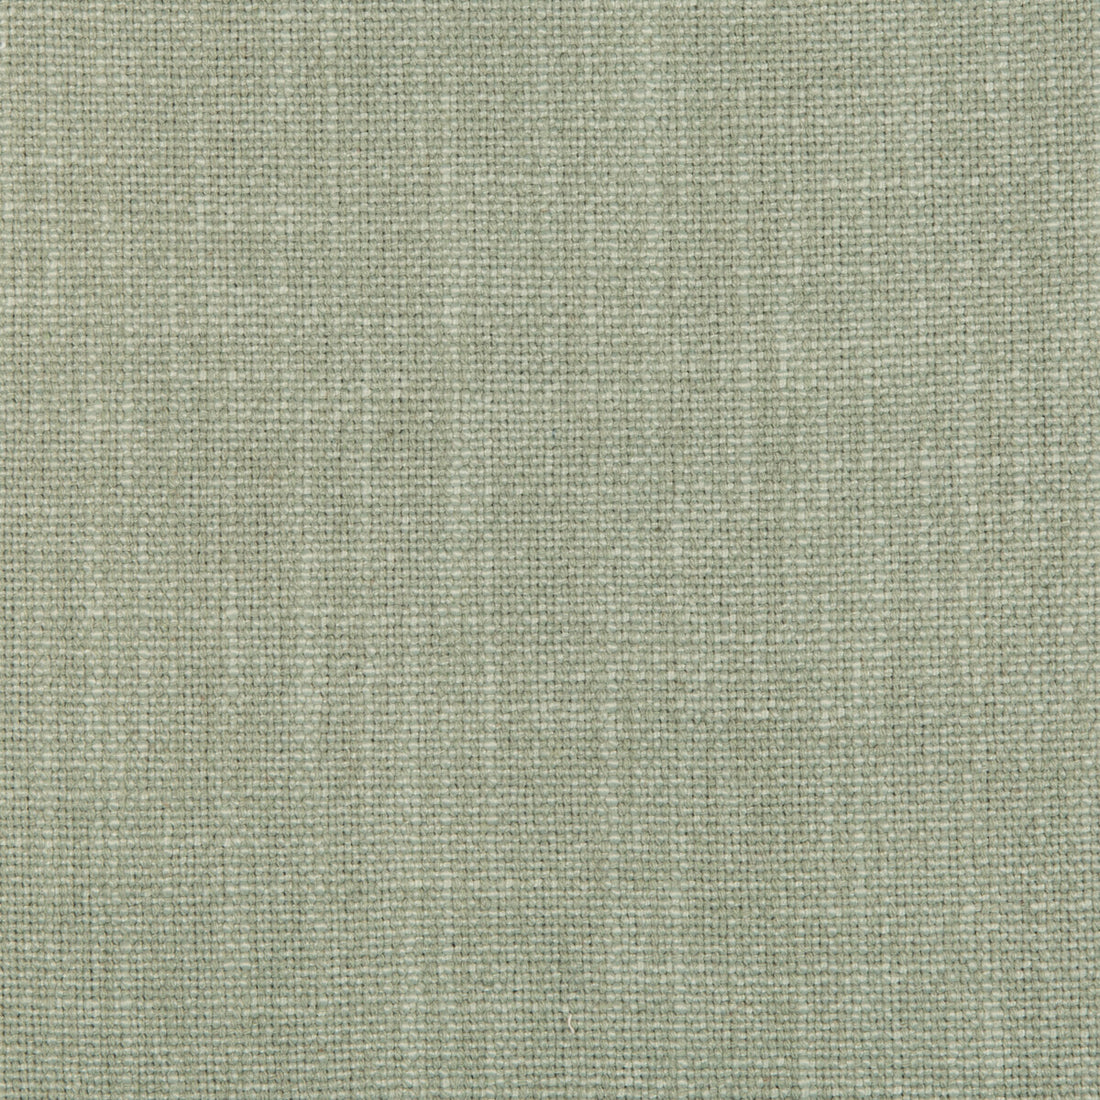 Kravet Smart fabric in 35226-130 color - pattern 35226.130.0 - by Kravet Smart in the Performance Kravetarmor collection